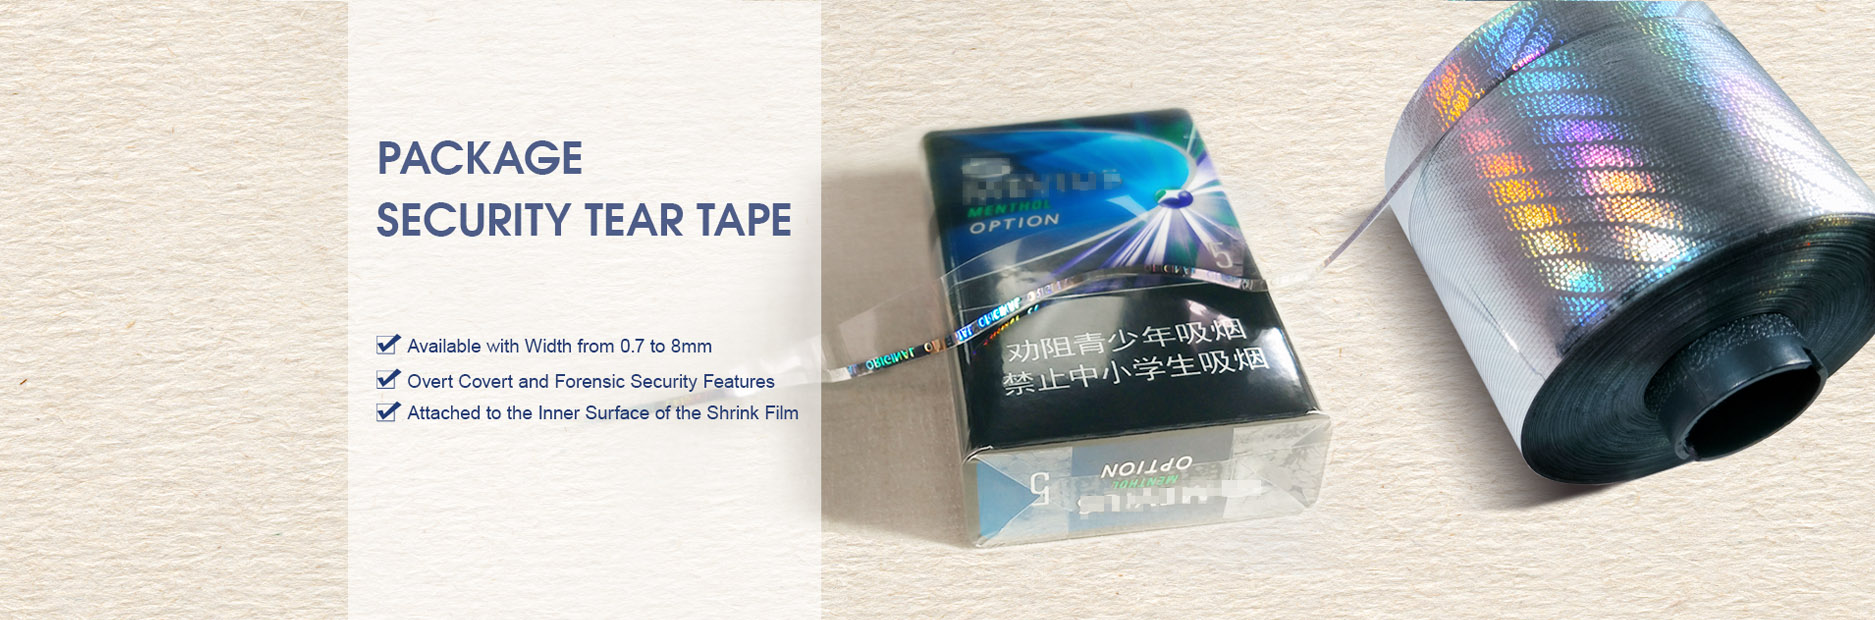 Security Package Tear Tape for Cigarette, Tea, Medicine